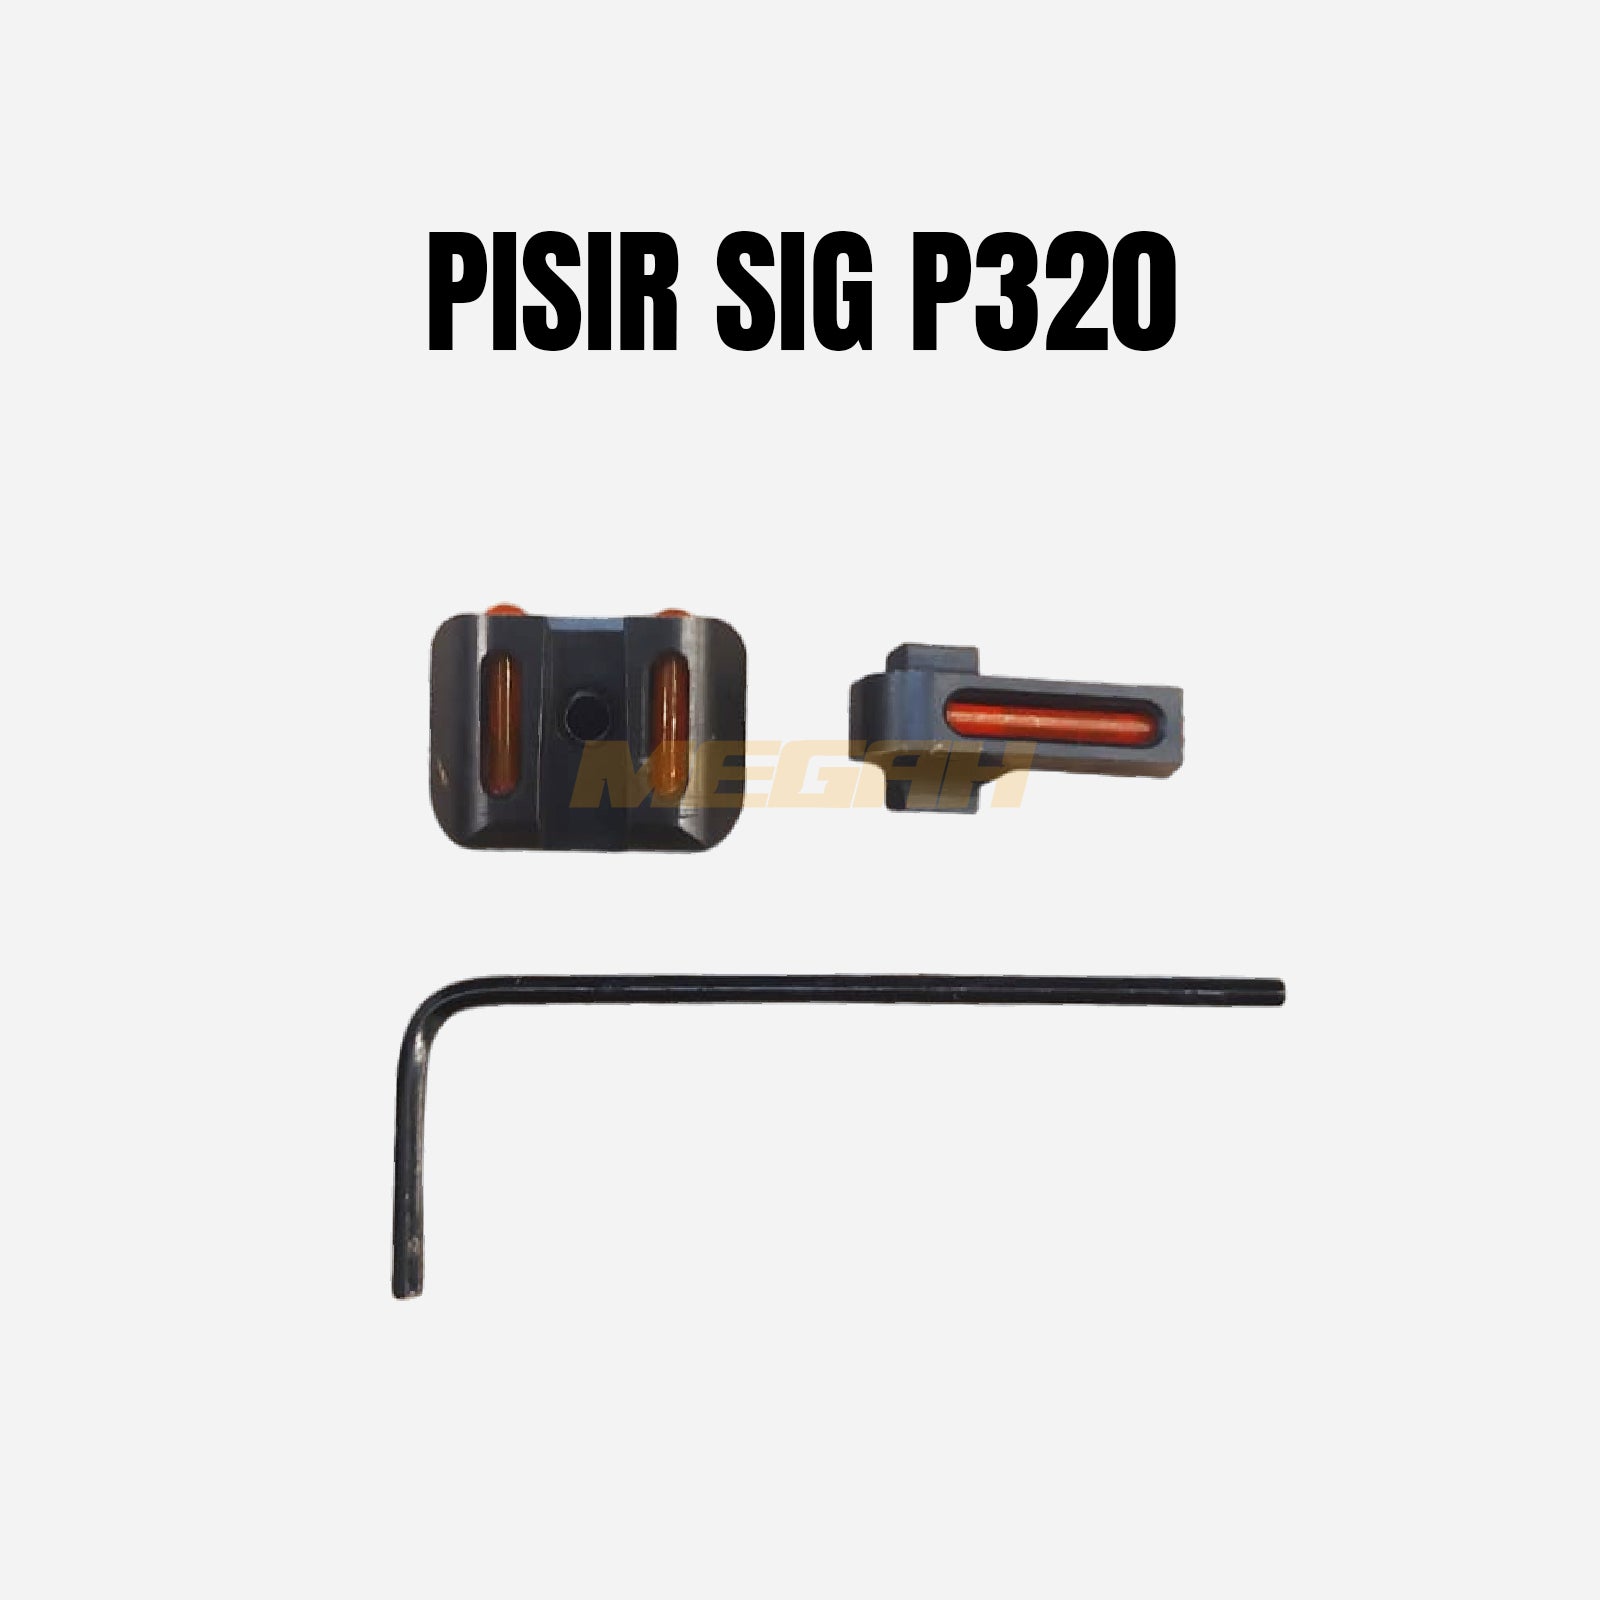 PISIR SIGSAUER P320 API